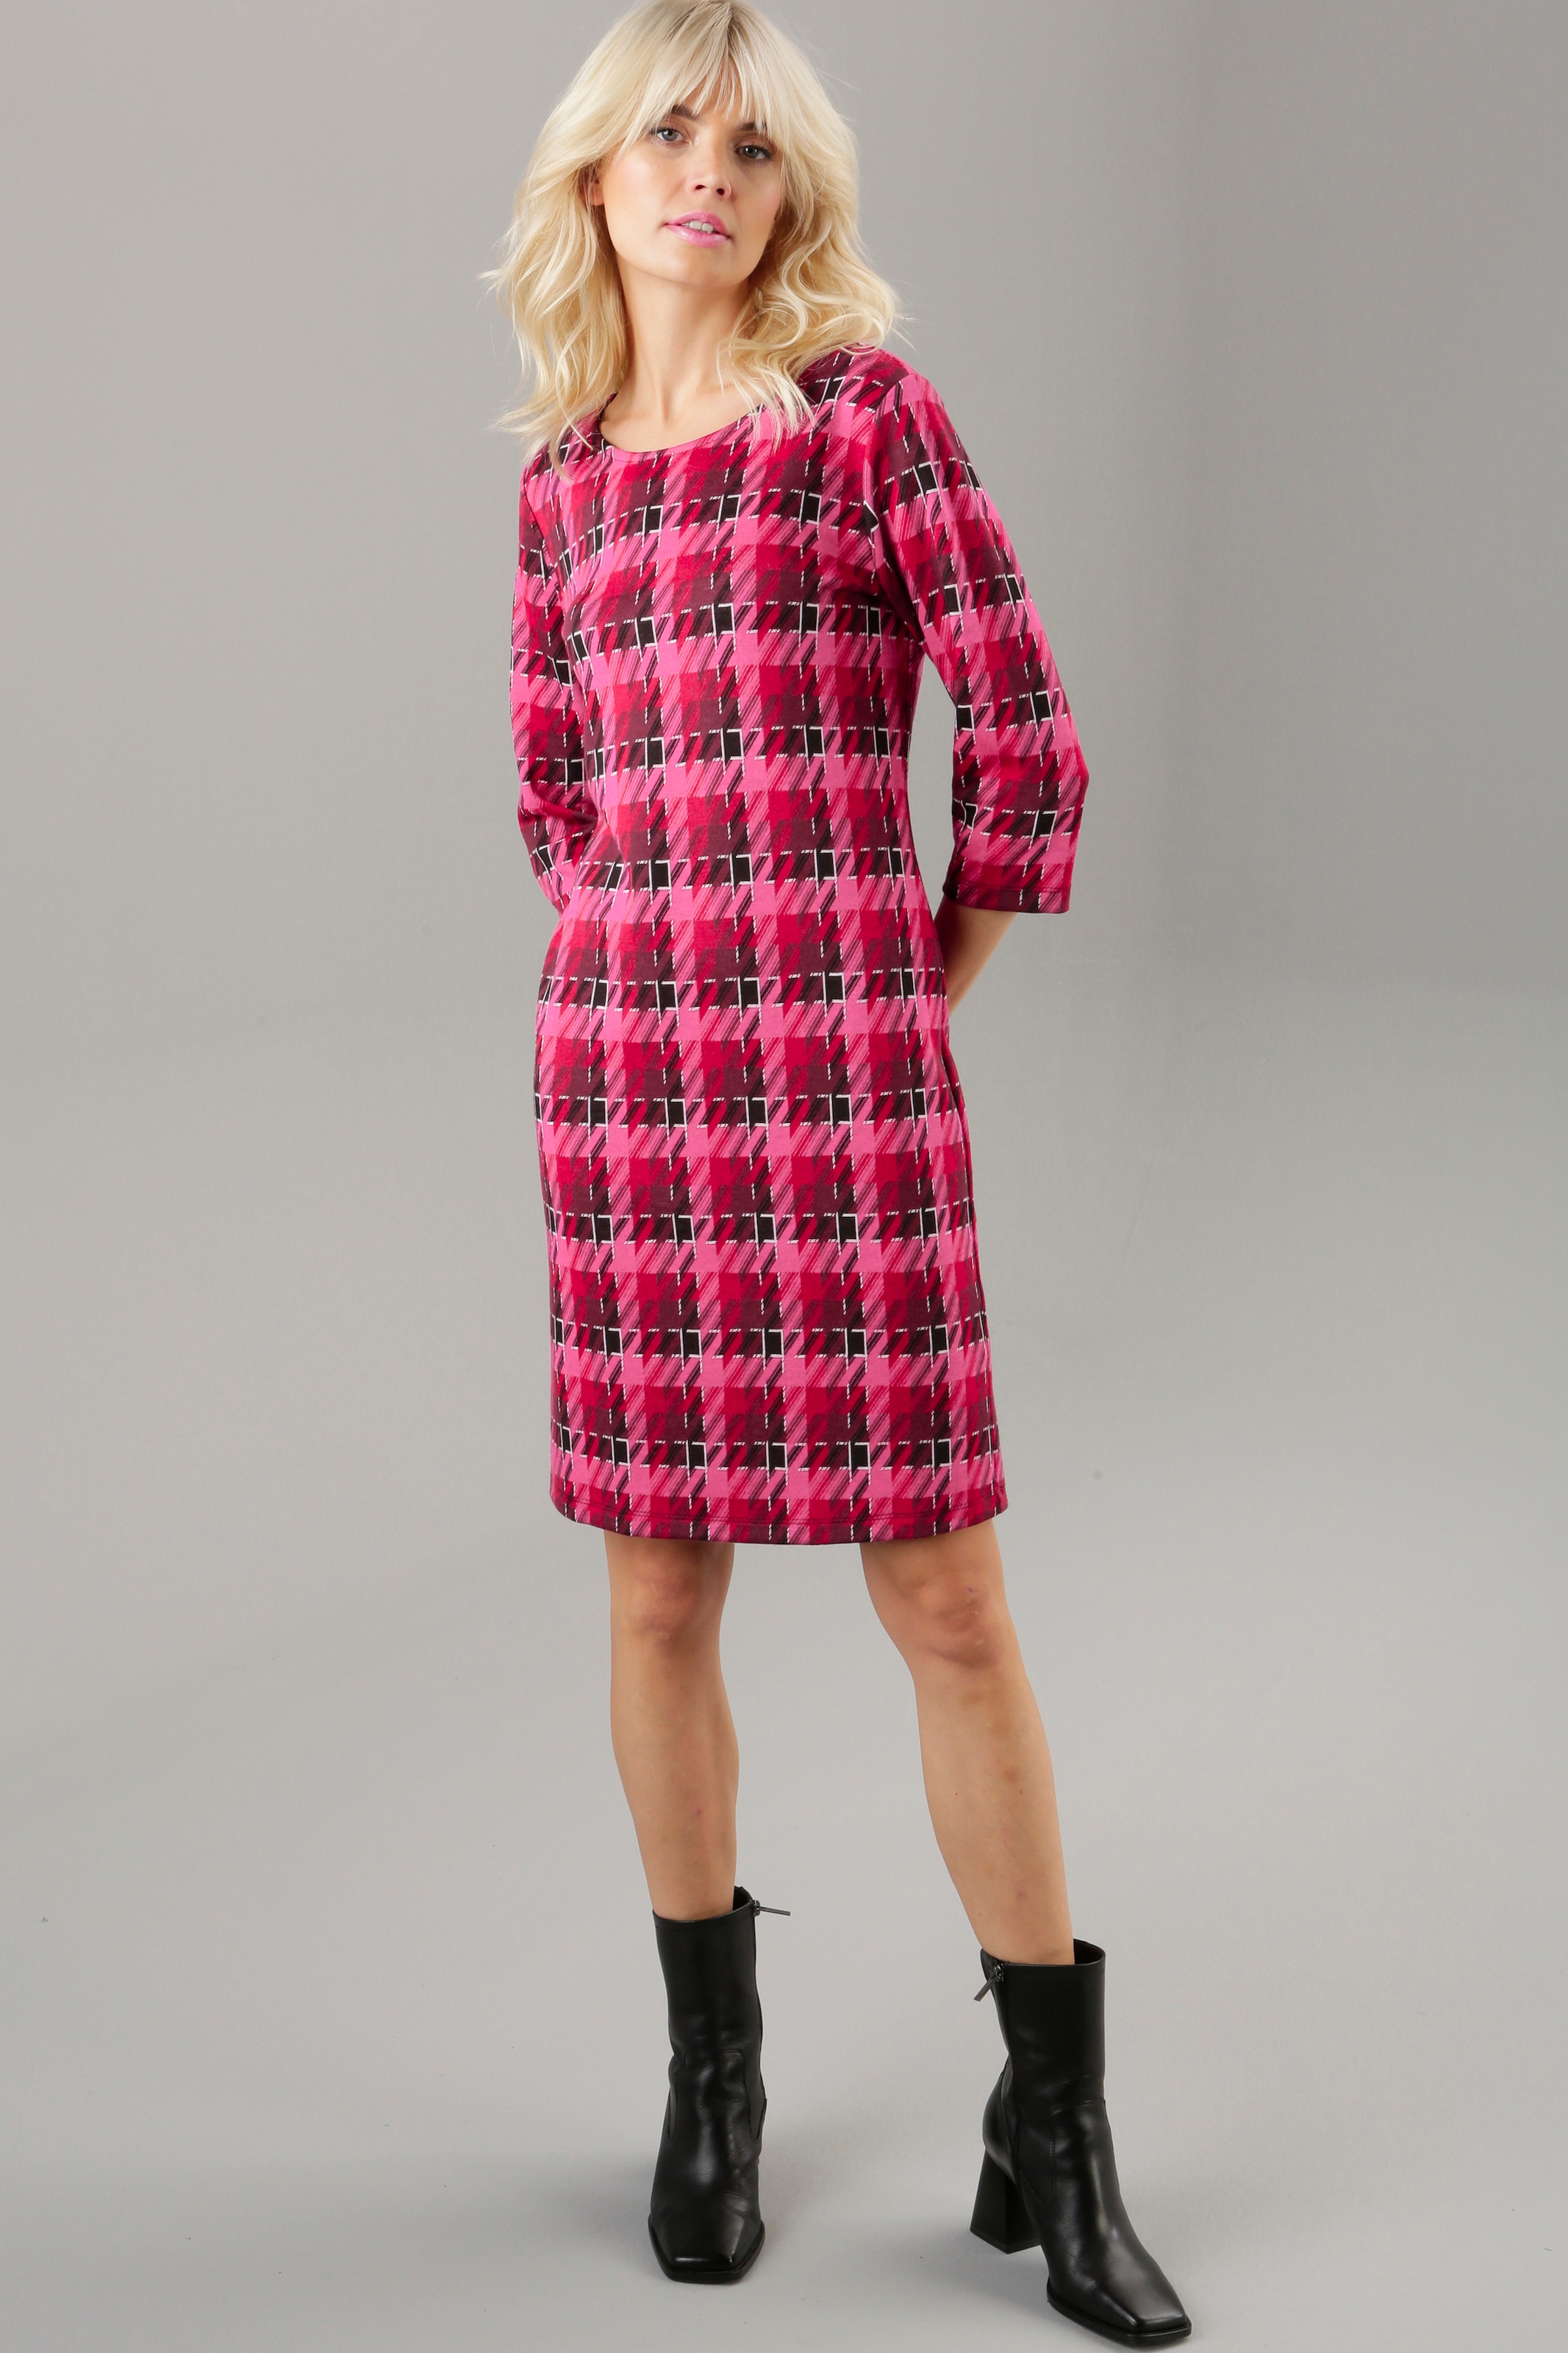 Aniston SELECTED Jerseykleid mit trendy Allover-Muster in Knallfarben -  NEUE KOLLEKTION